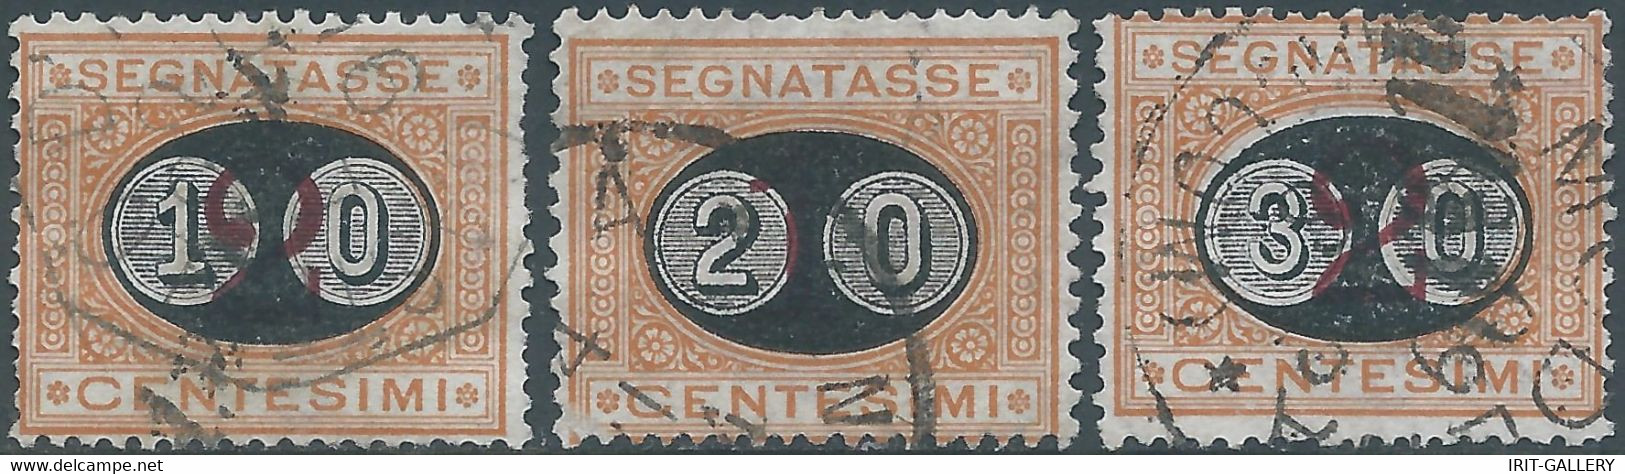 ITALY,ITALIE-ITALIEN,Kingdom 1890 Segnatasse,Services Postage Due,2c On 10c-1c On 20c-2c On 30c,Obliterated,Value:€85,00 - Postage Due